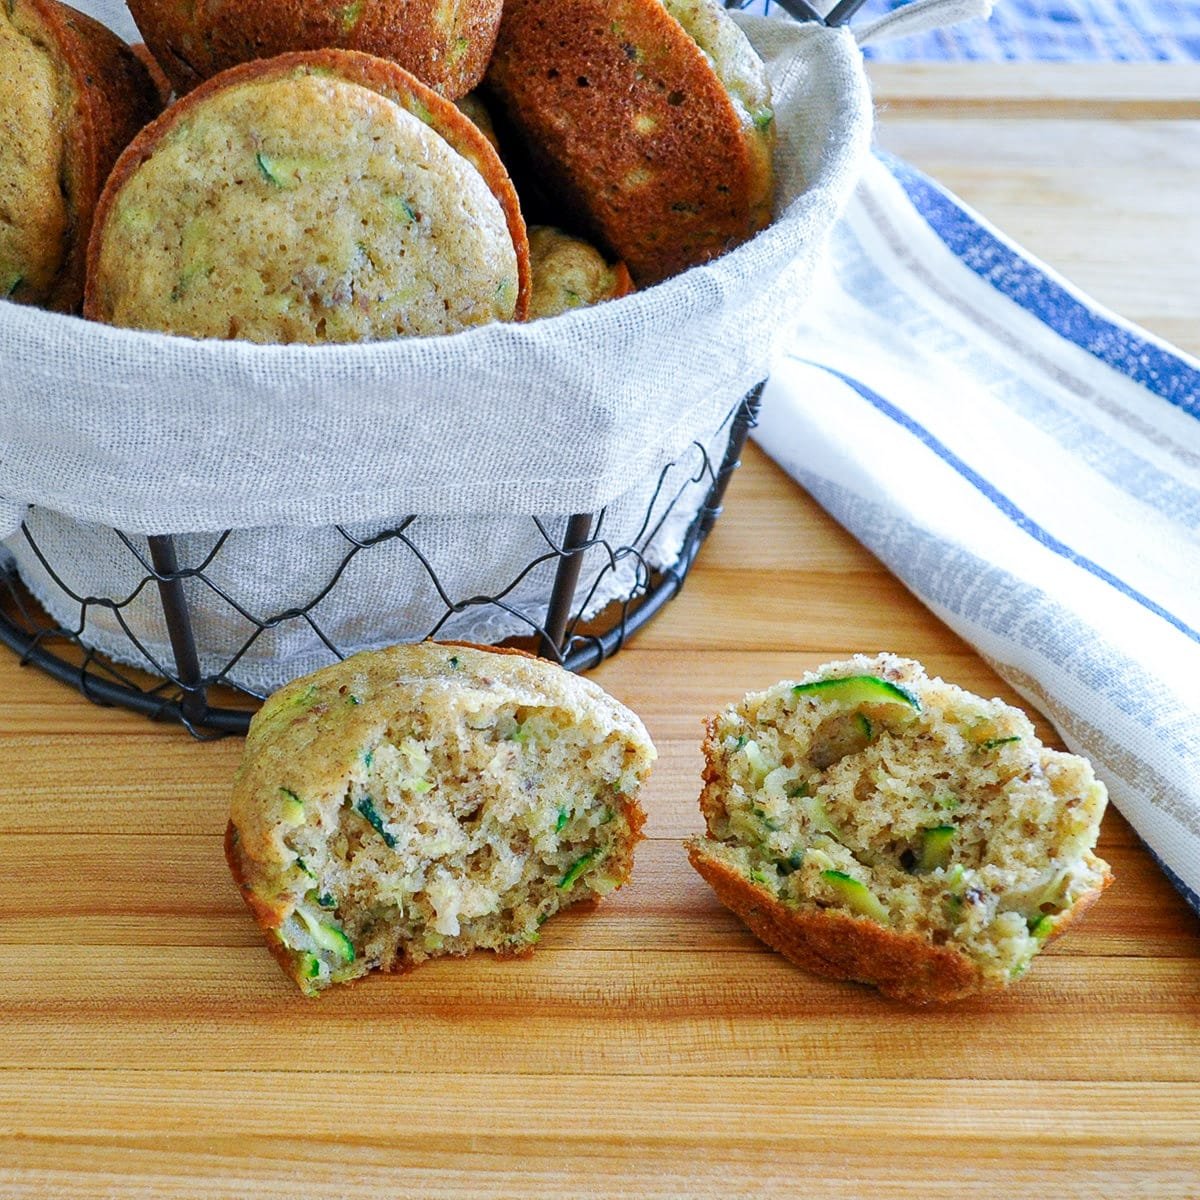 A split open zucchini muffin setting next to a basket of muffins.